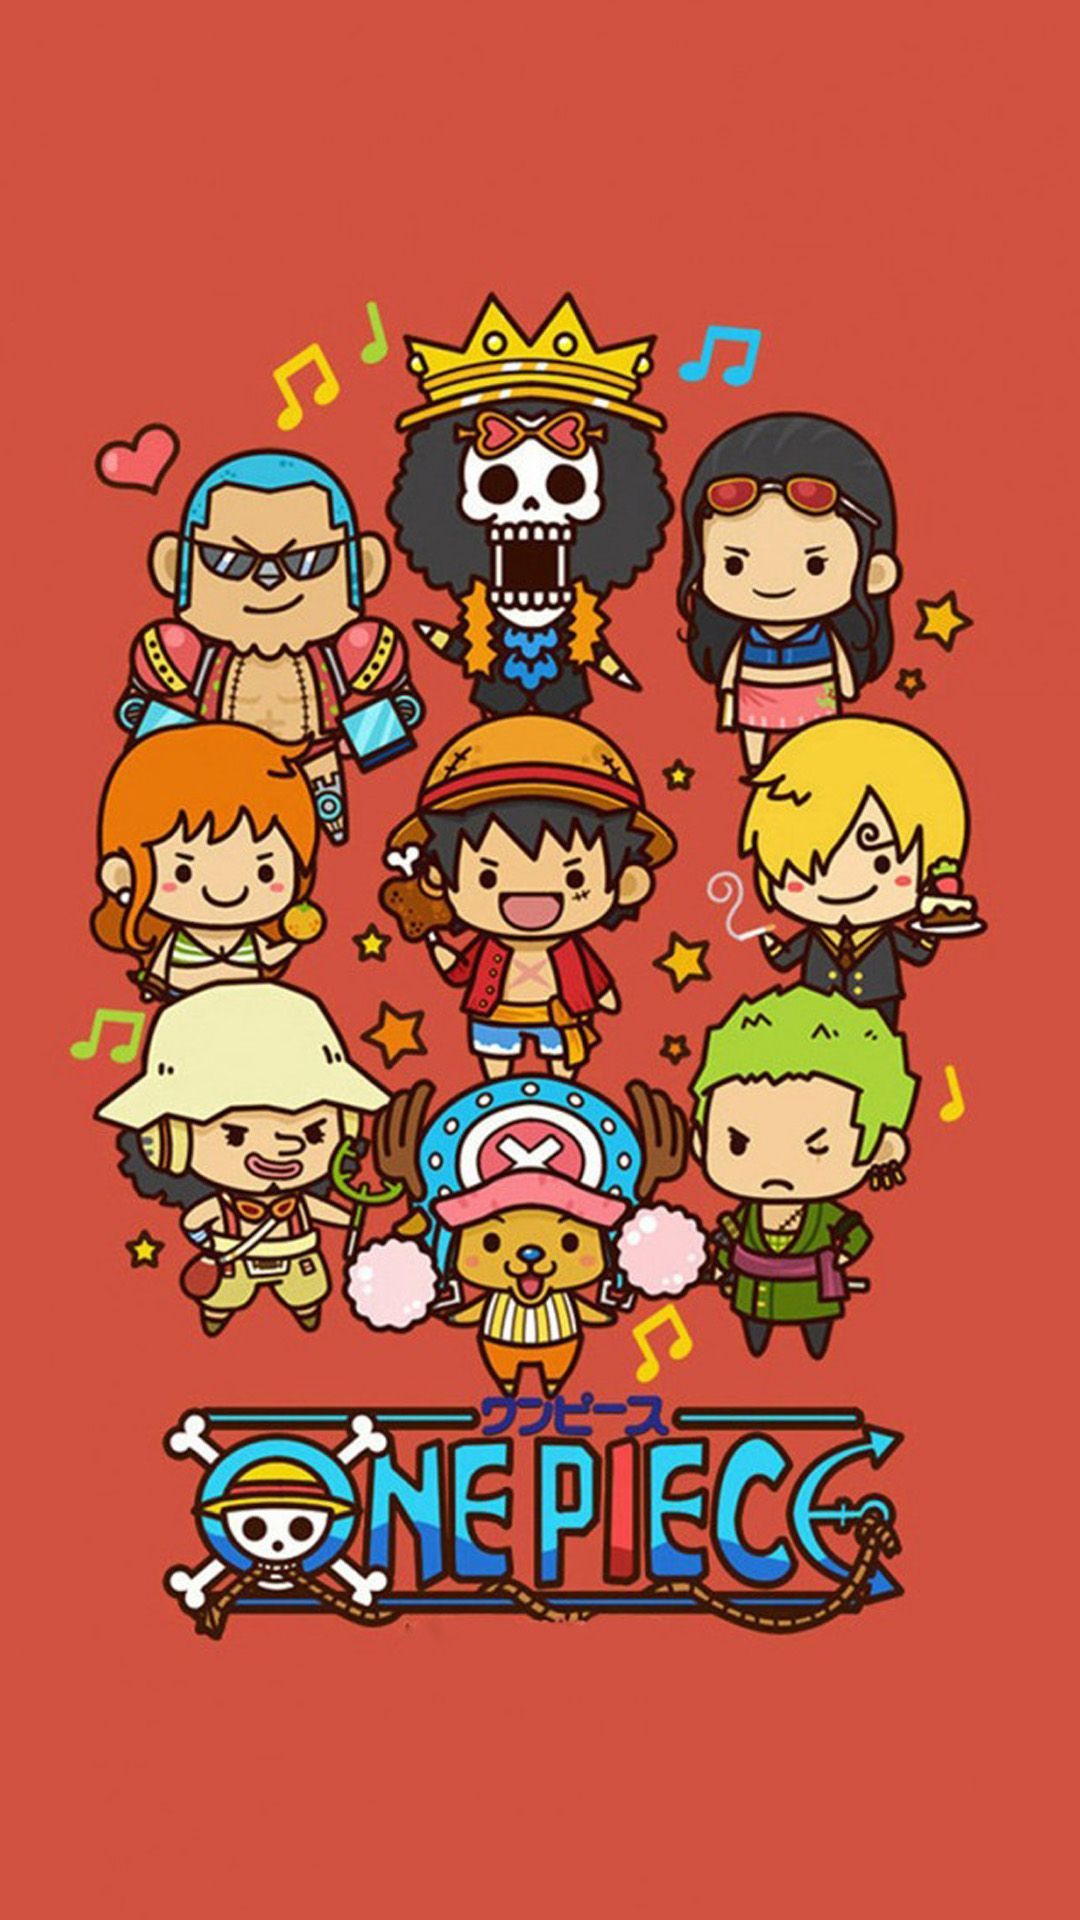 One Piece wallpaper by YozanArtz  Download on ZEDGE  aded